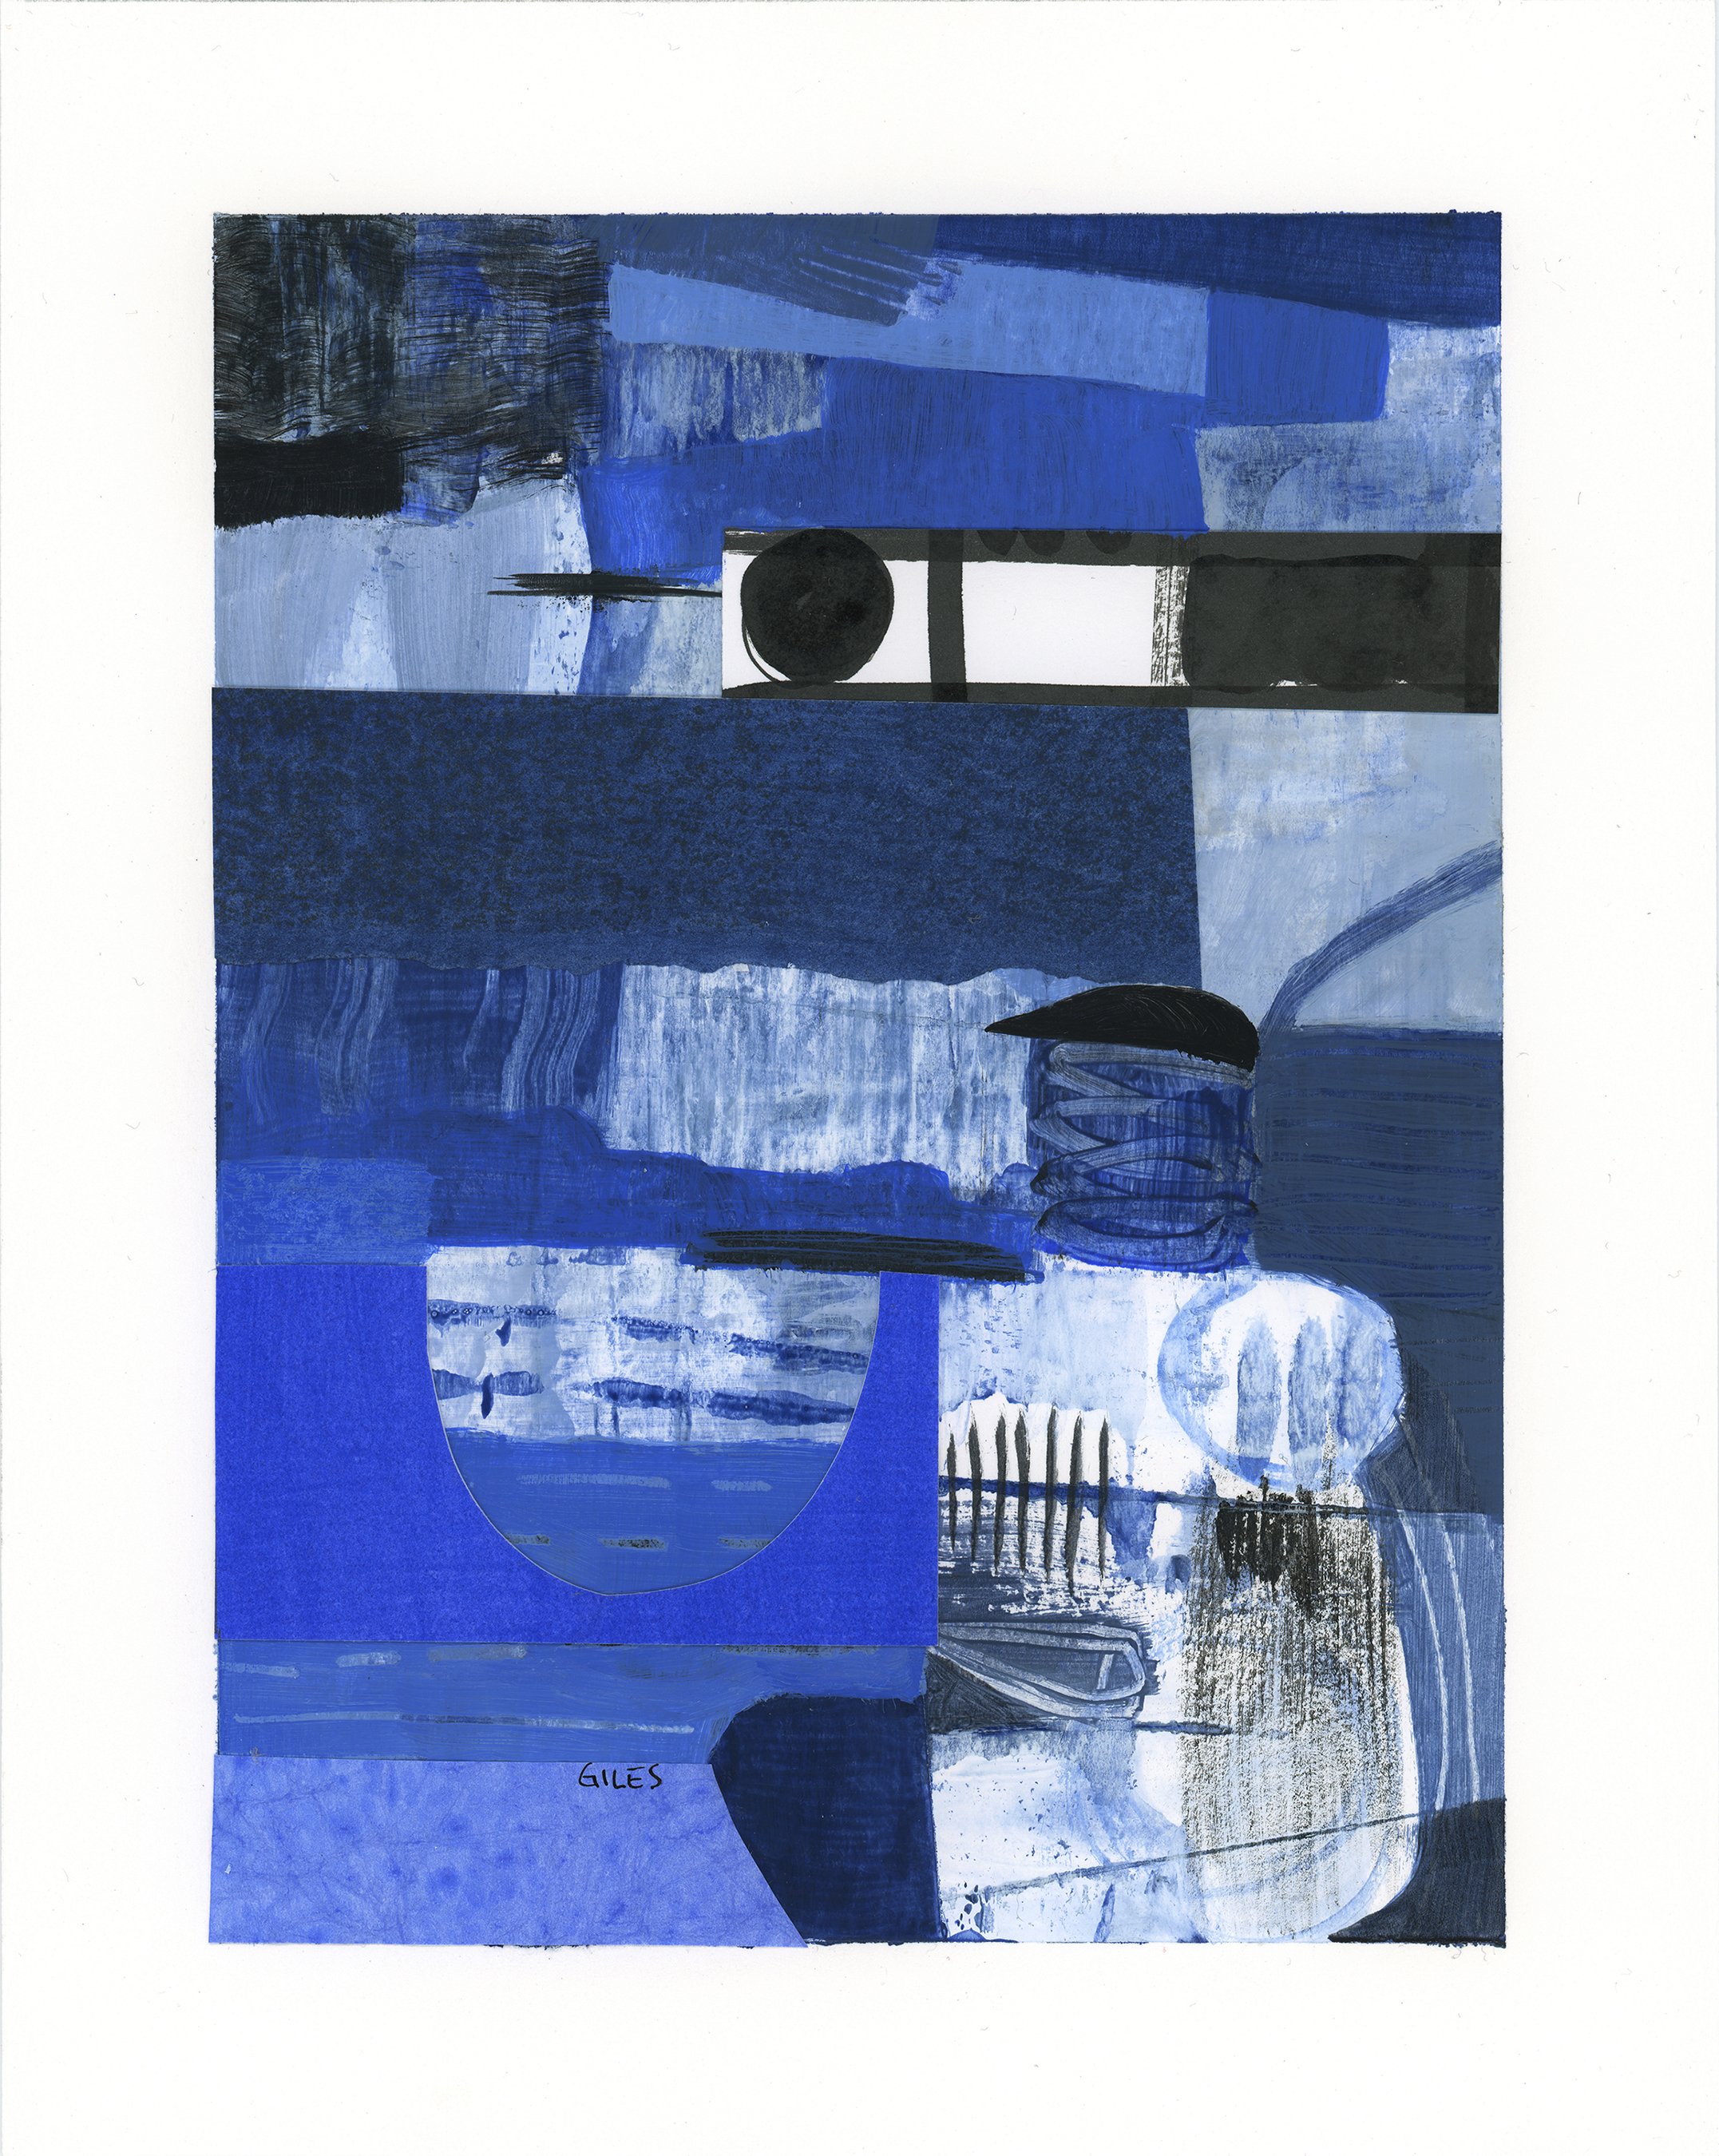 BG ART 3266 Blue Study No.1 7000 pixels high 72ppi cropped to paper.jpg